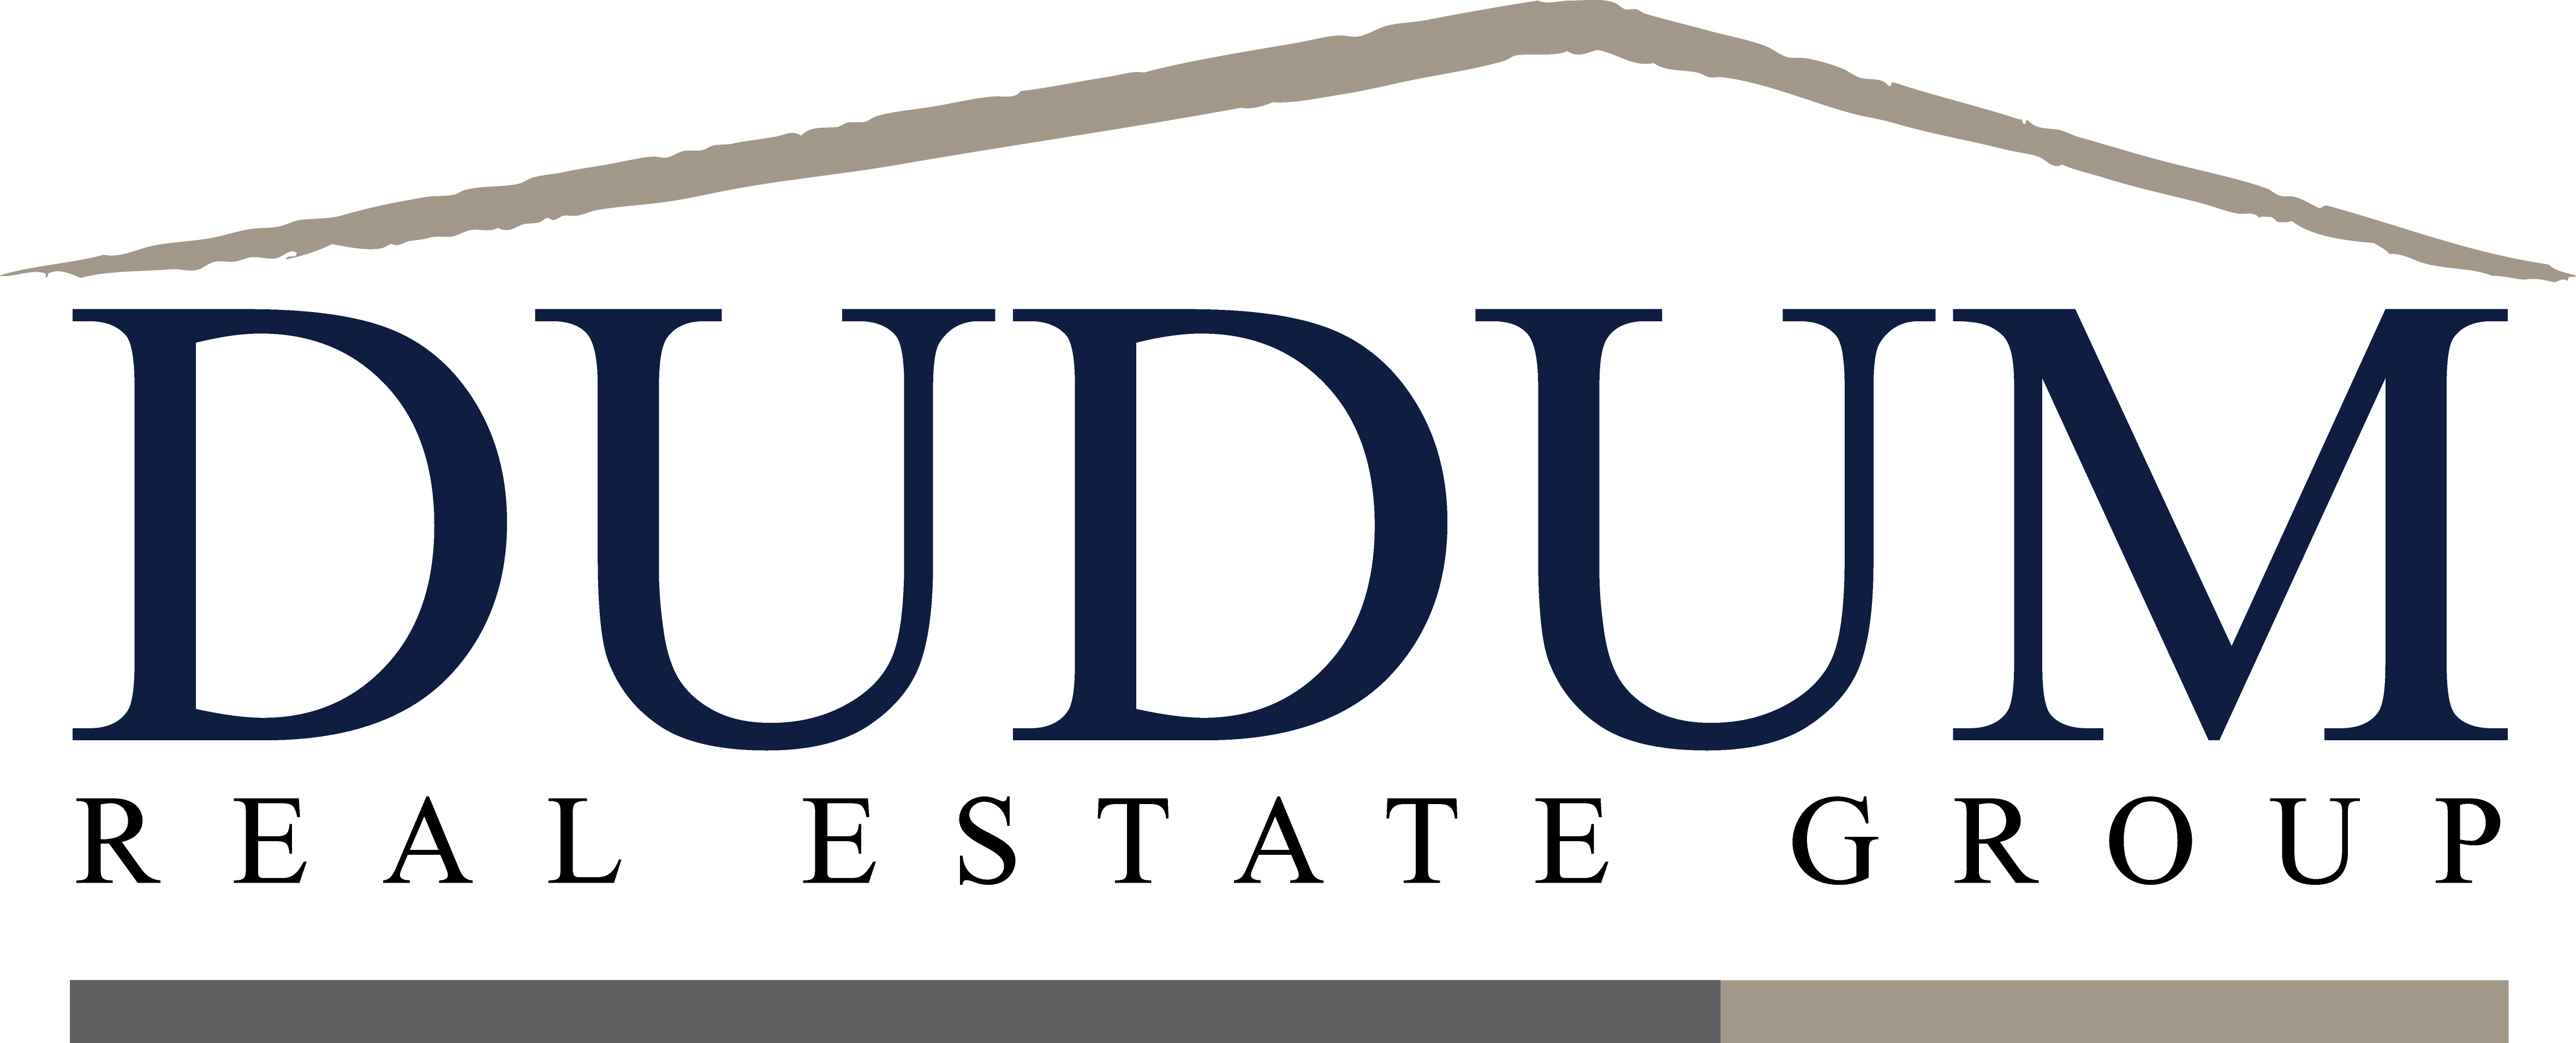 Dudum Real Estate Group